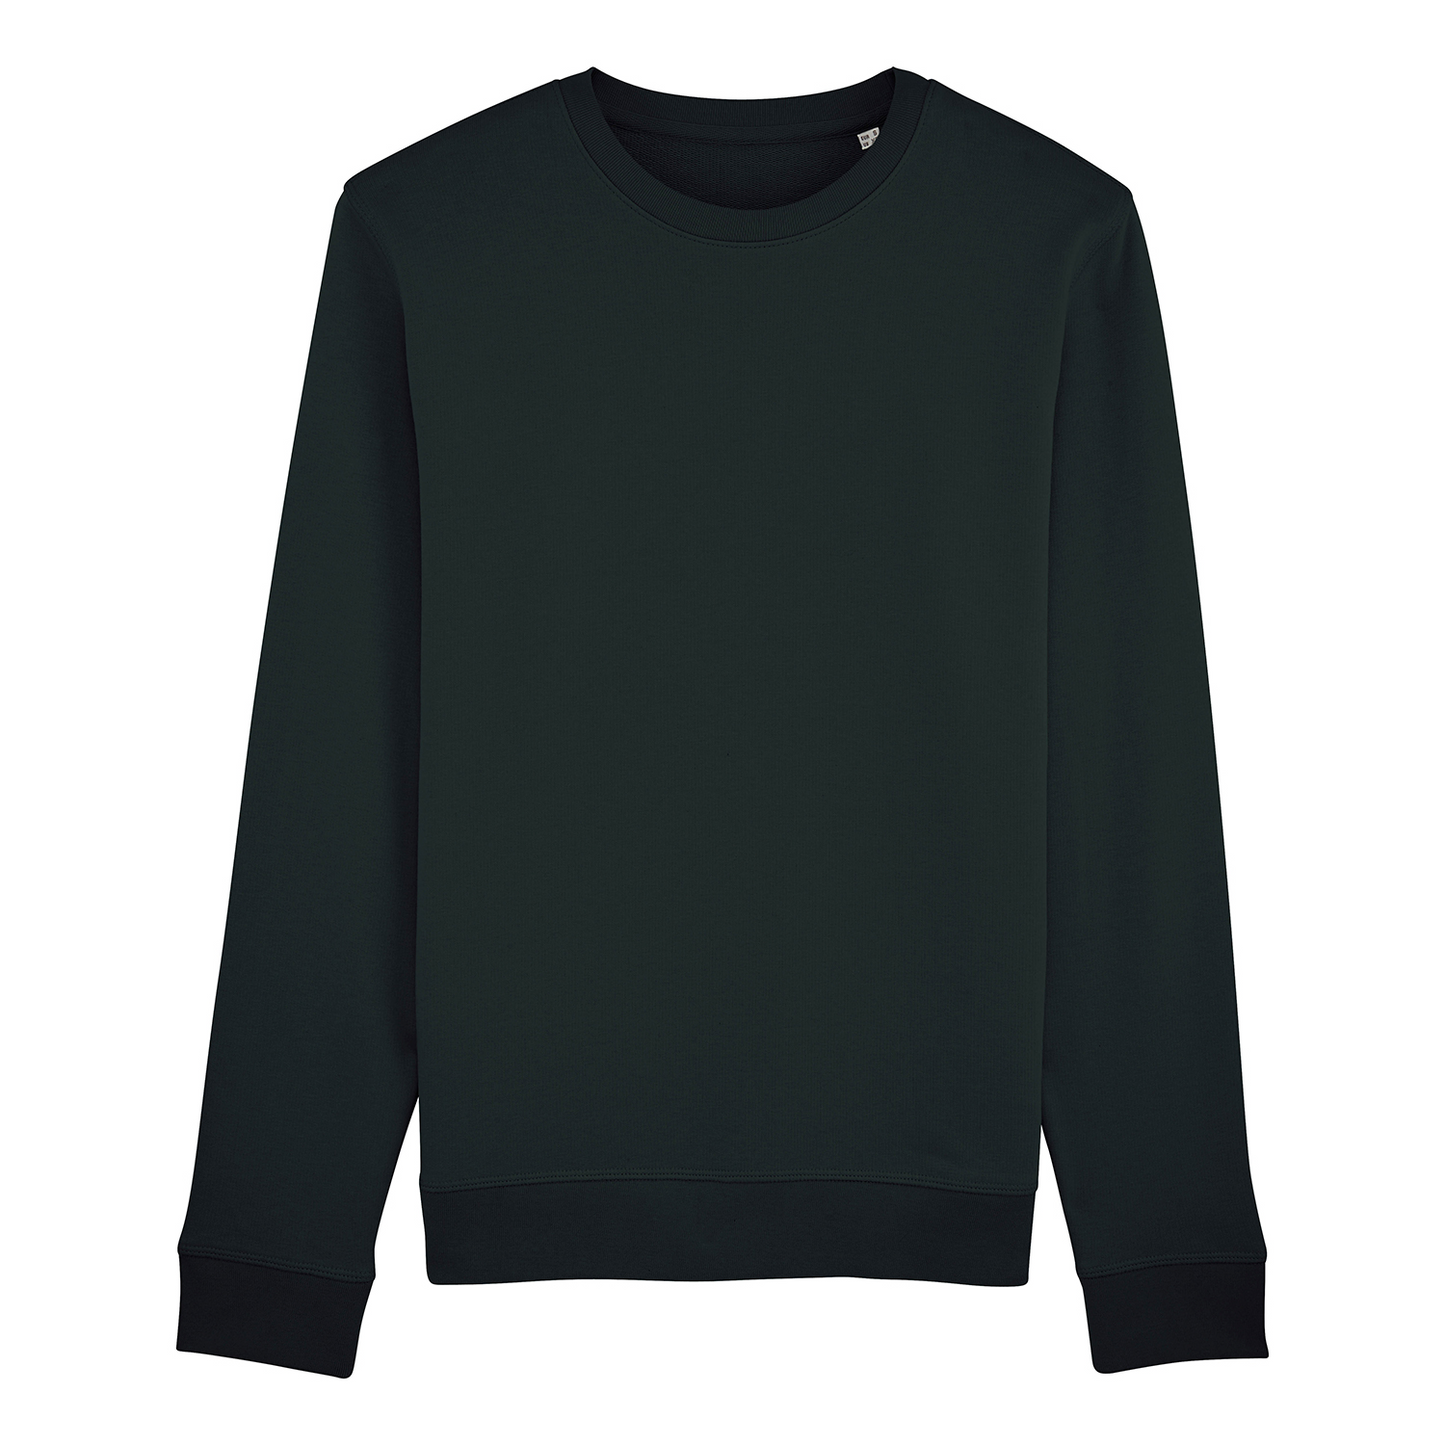 Sweater Abbe Zeiss, schwarz